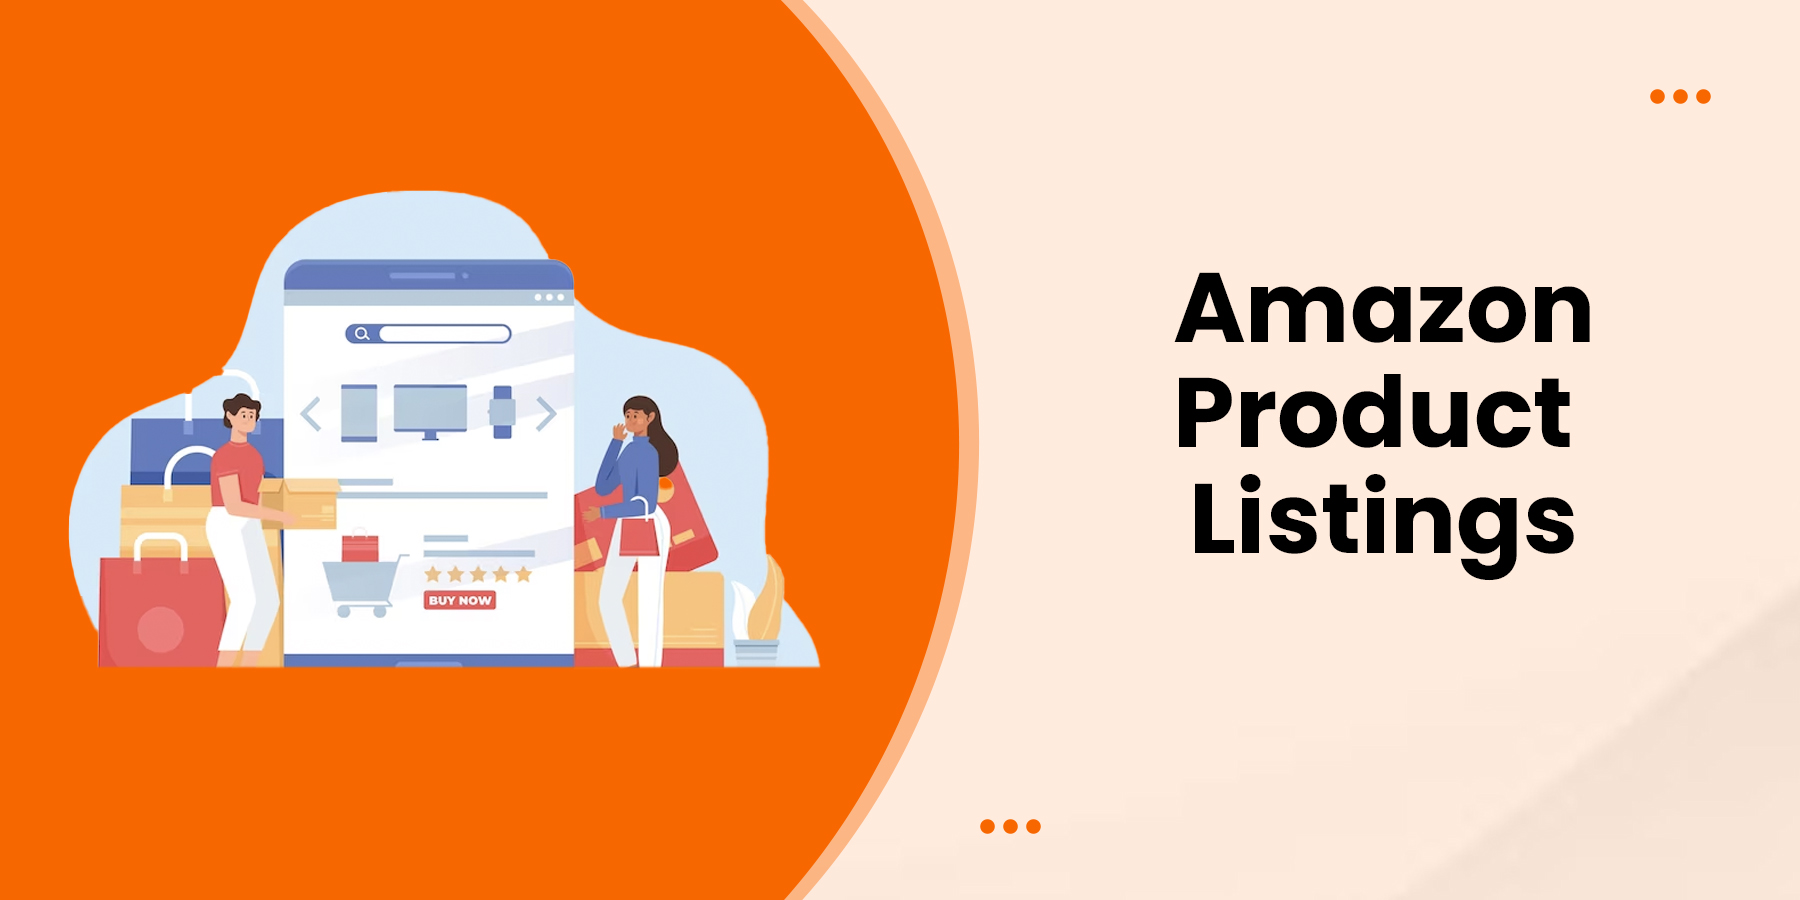 Amazon Product Listings